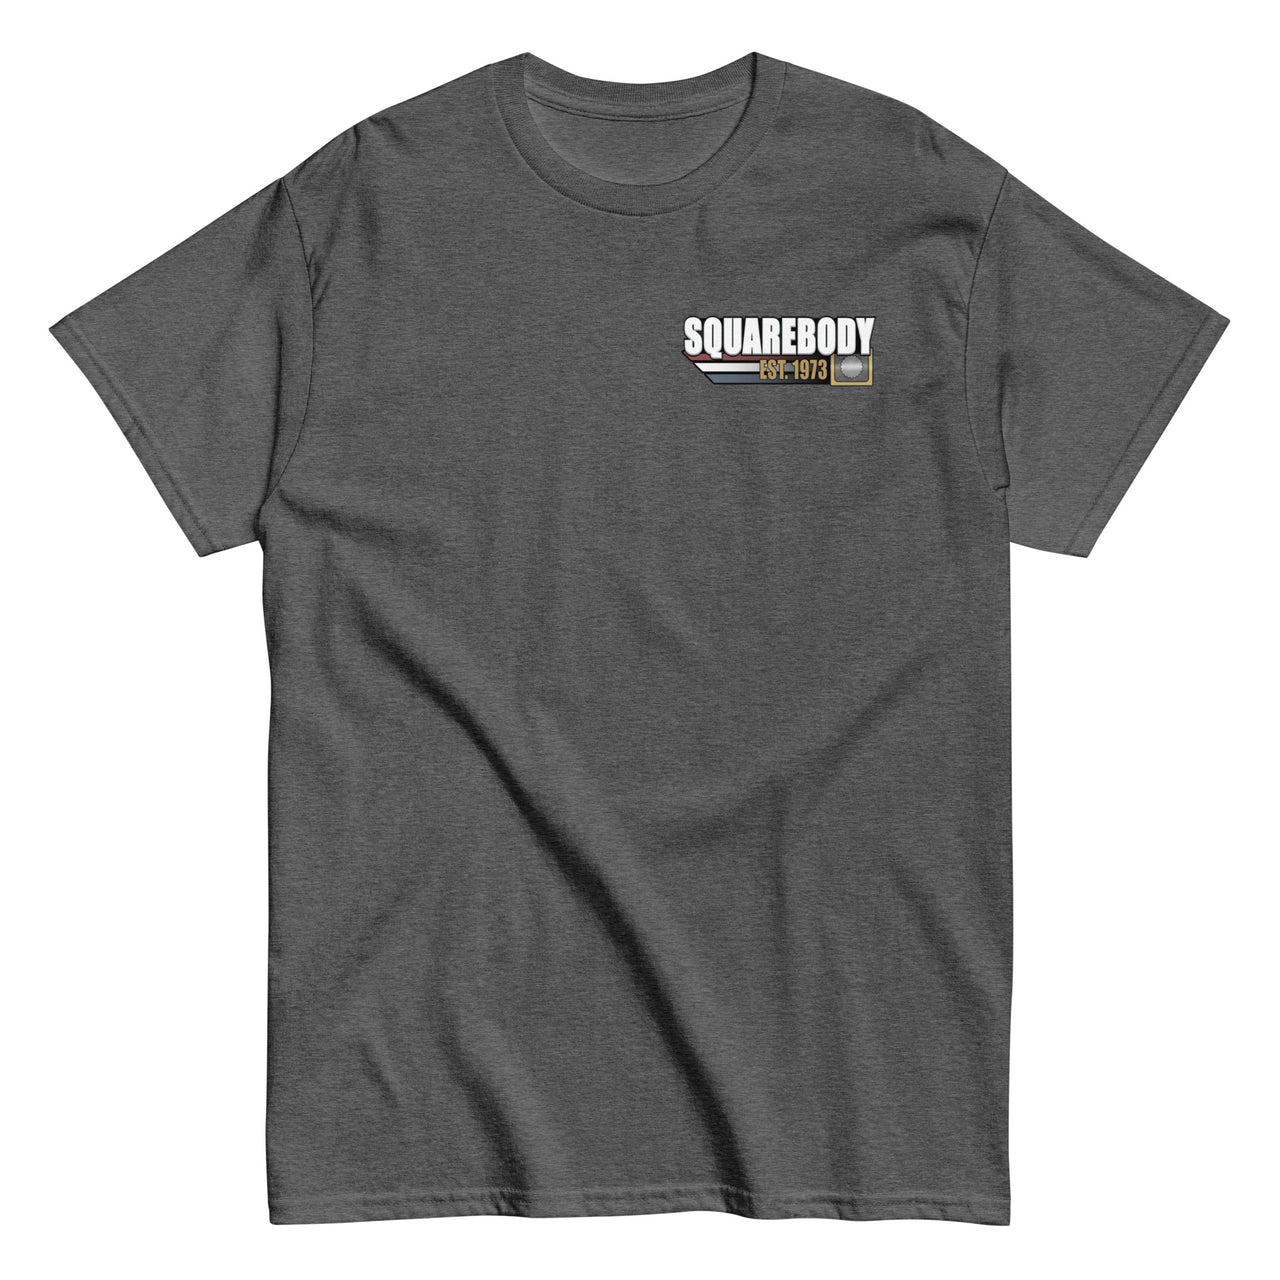 Square Body Truck T-Shirt Squarebody Est 1973 T-Shirt in dark heather